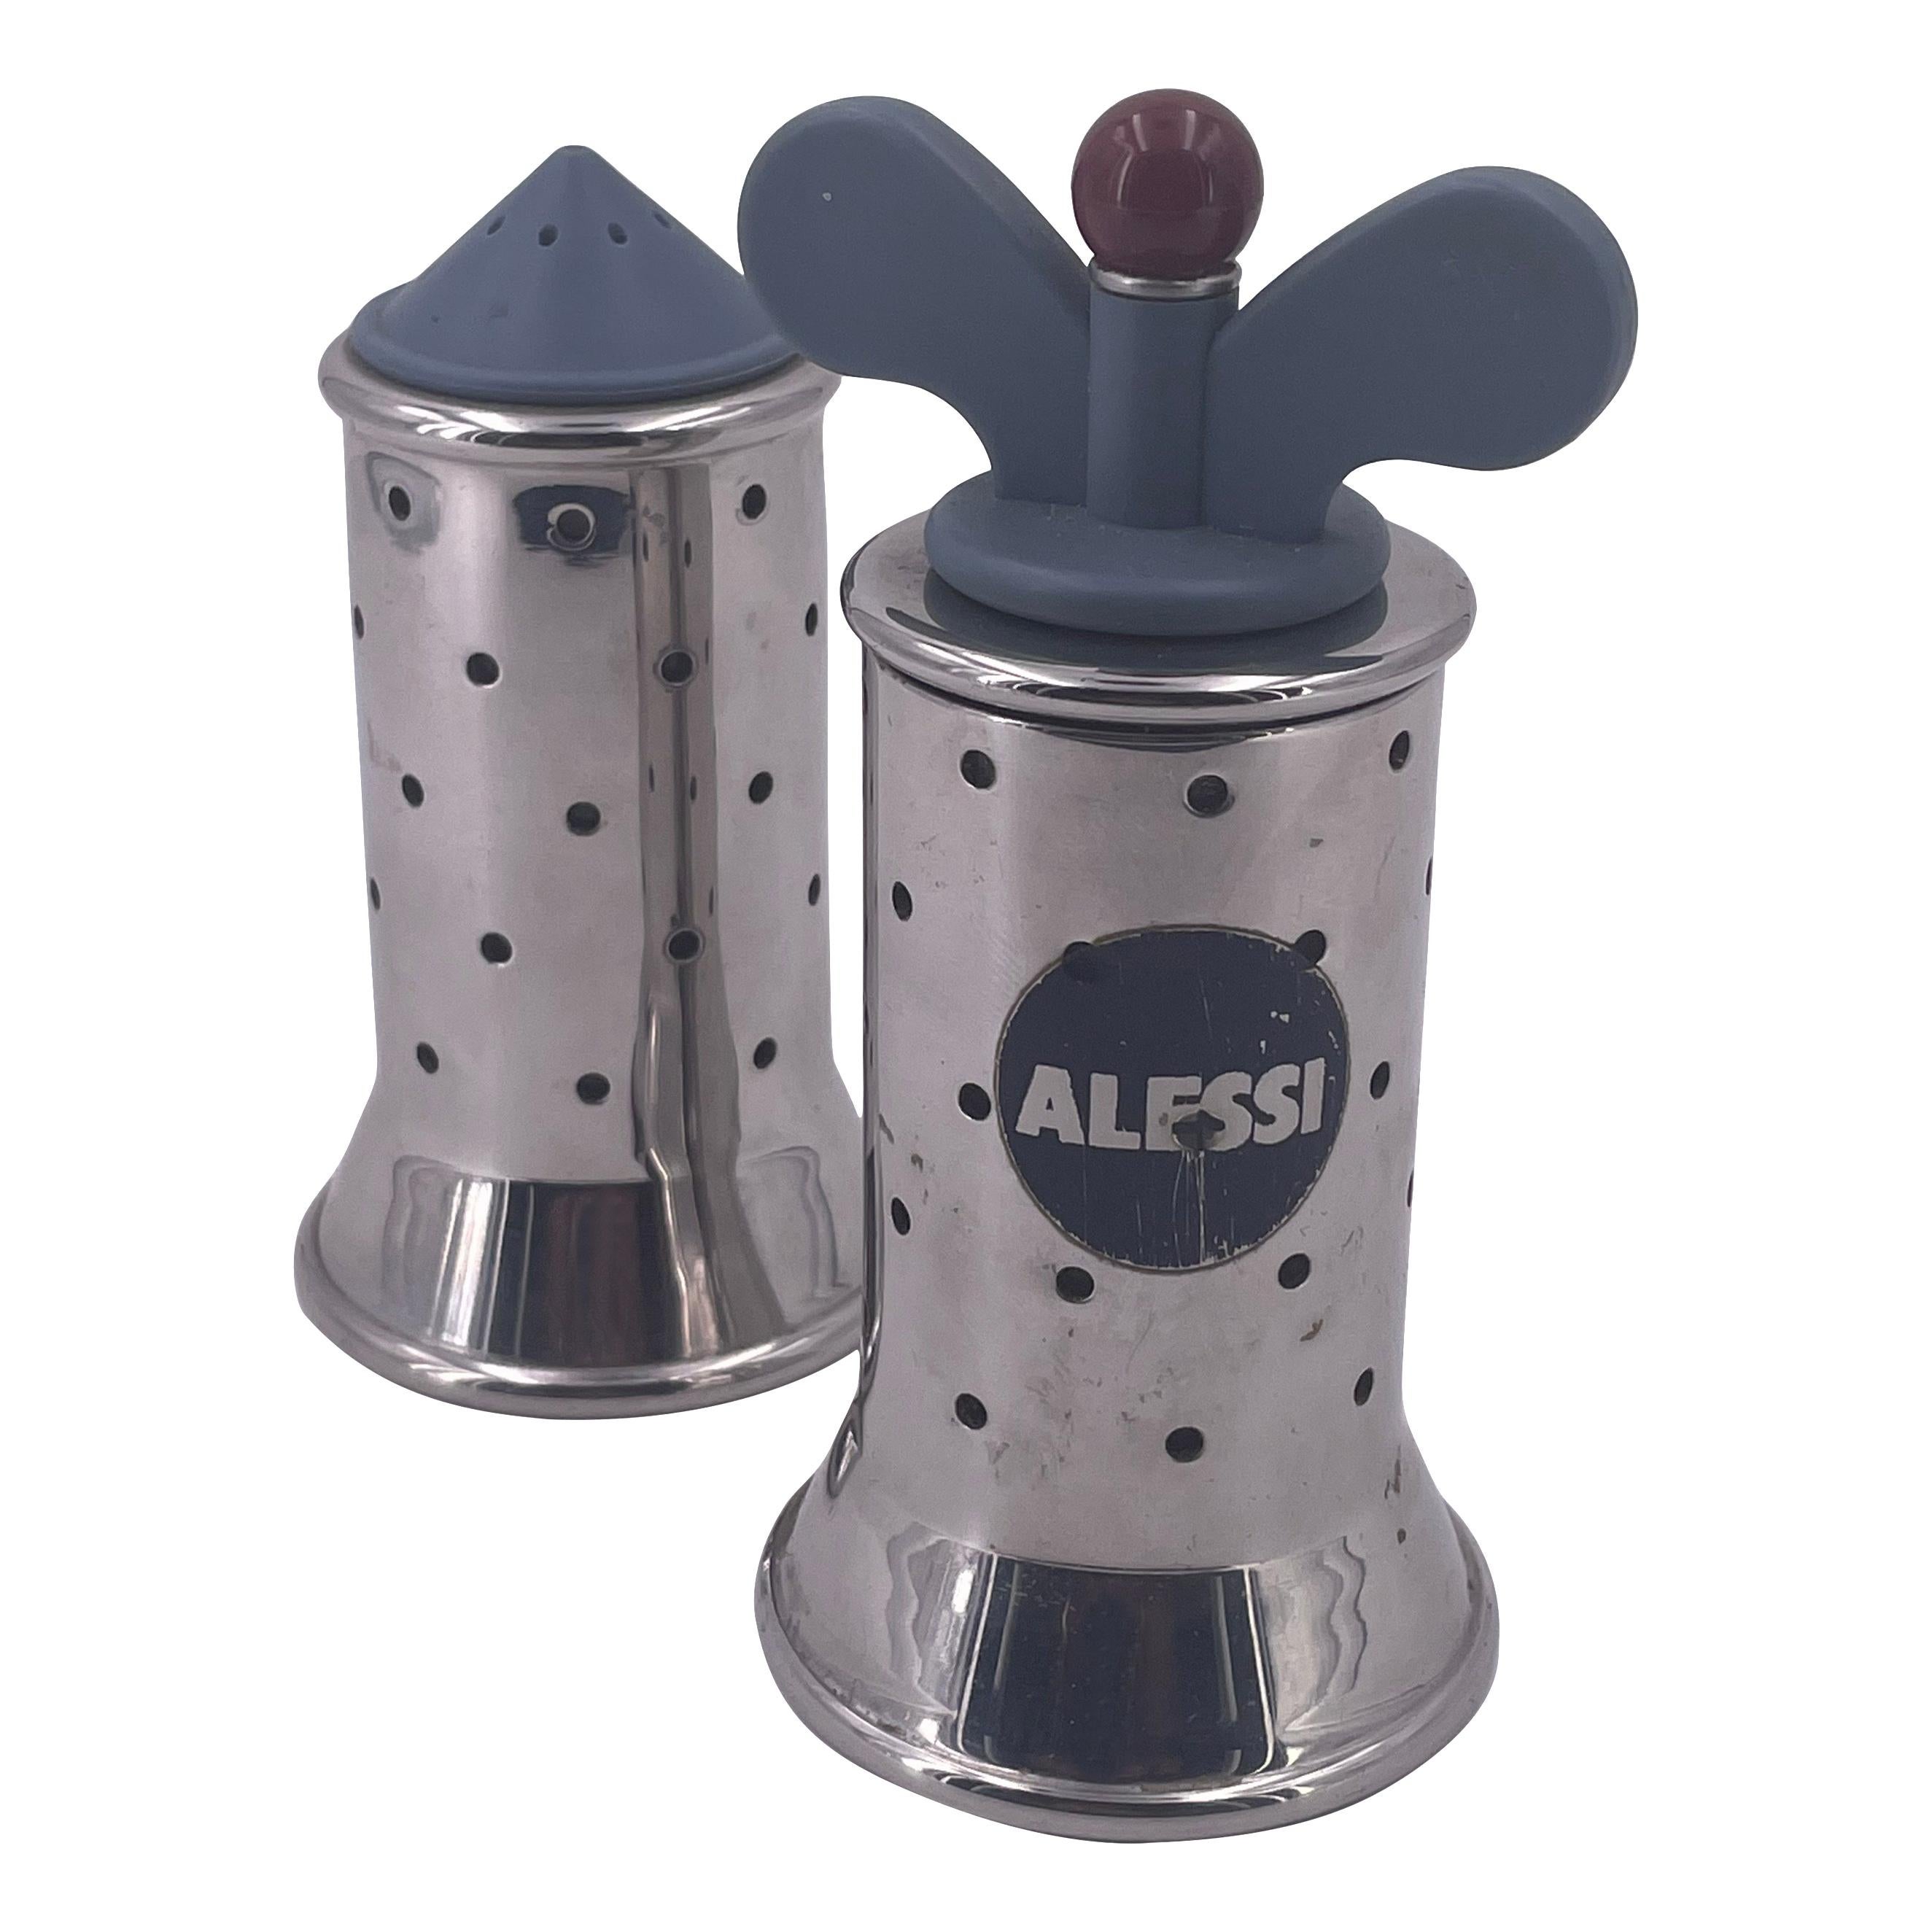 Salt & Pepper Shakers Designed by Michael Graves for Alessi Memphis Era